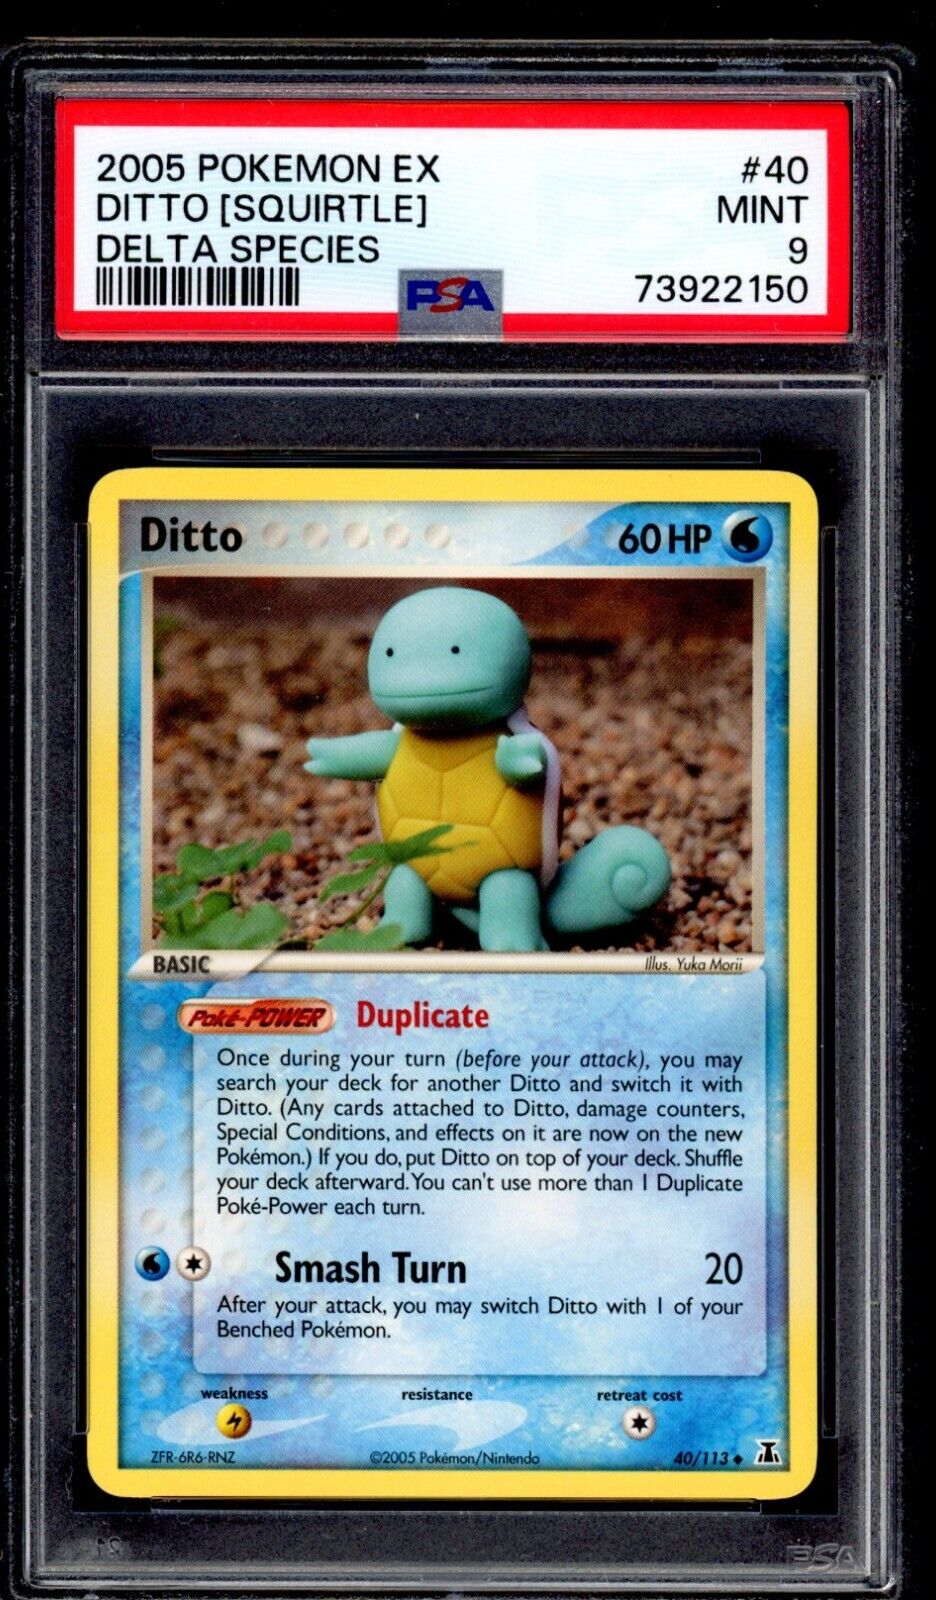 PSA 9 Ditto (Squirtle) 2005 Pokemon Card 40/113 EX Delta Species